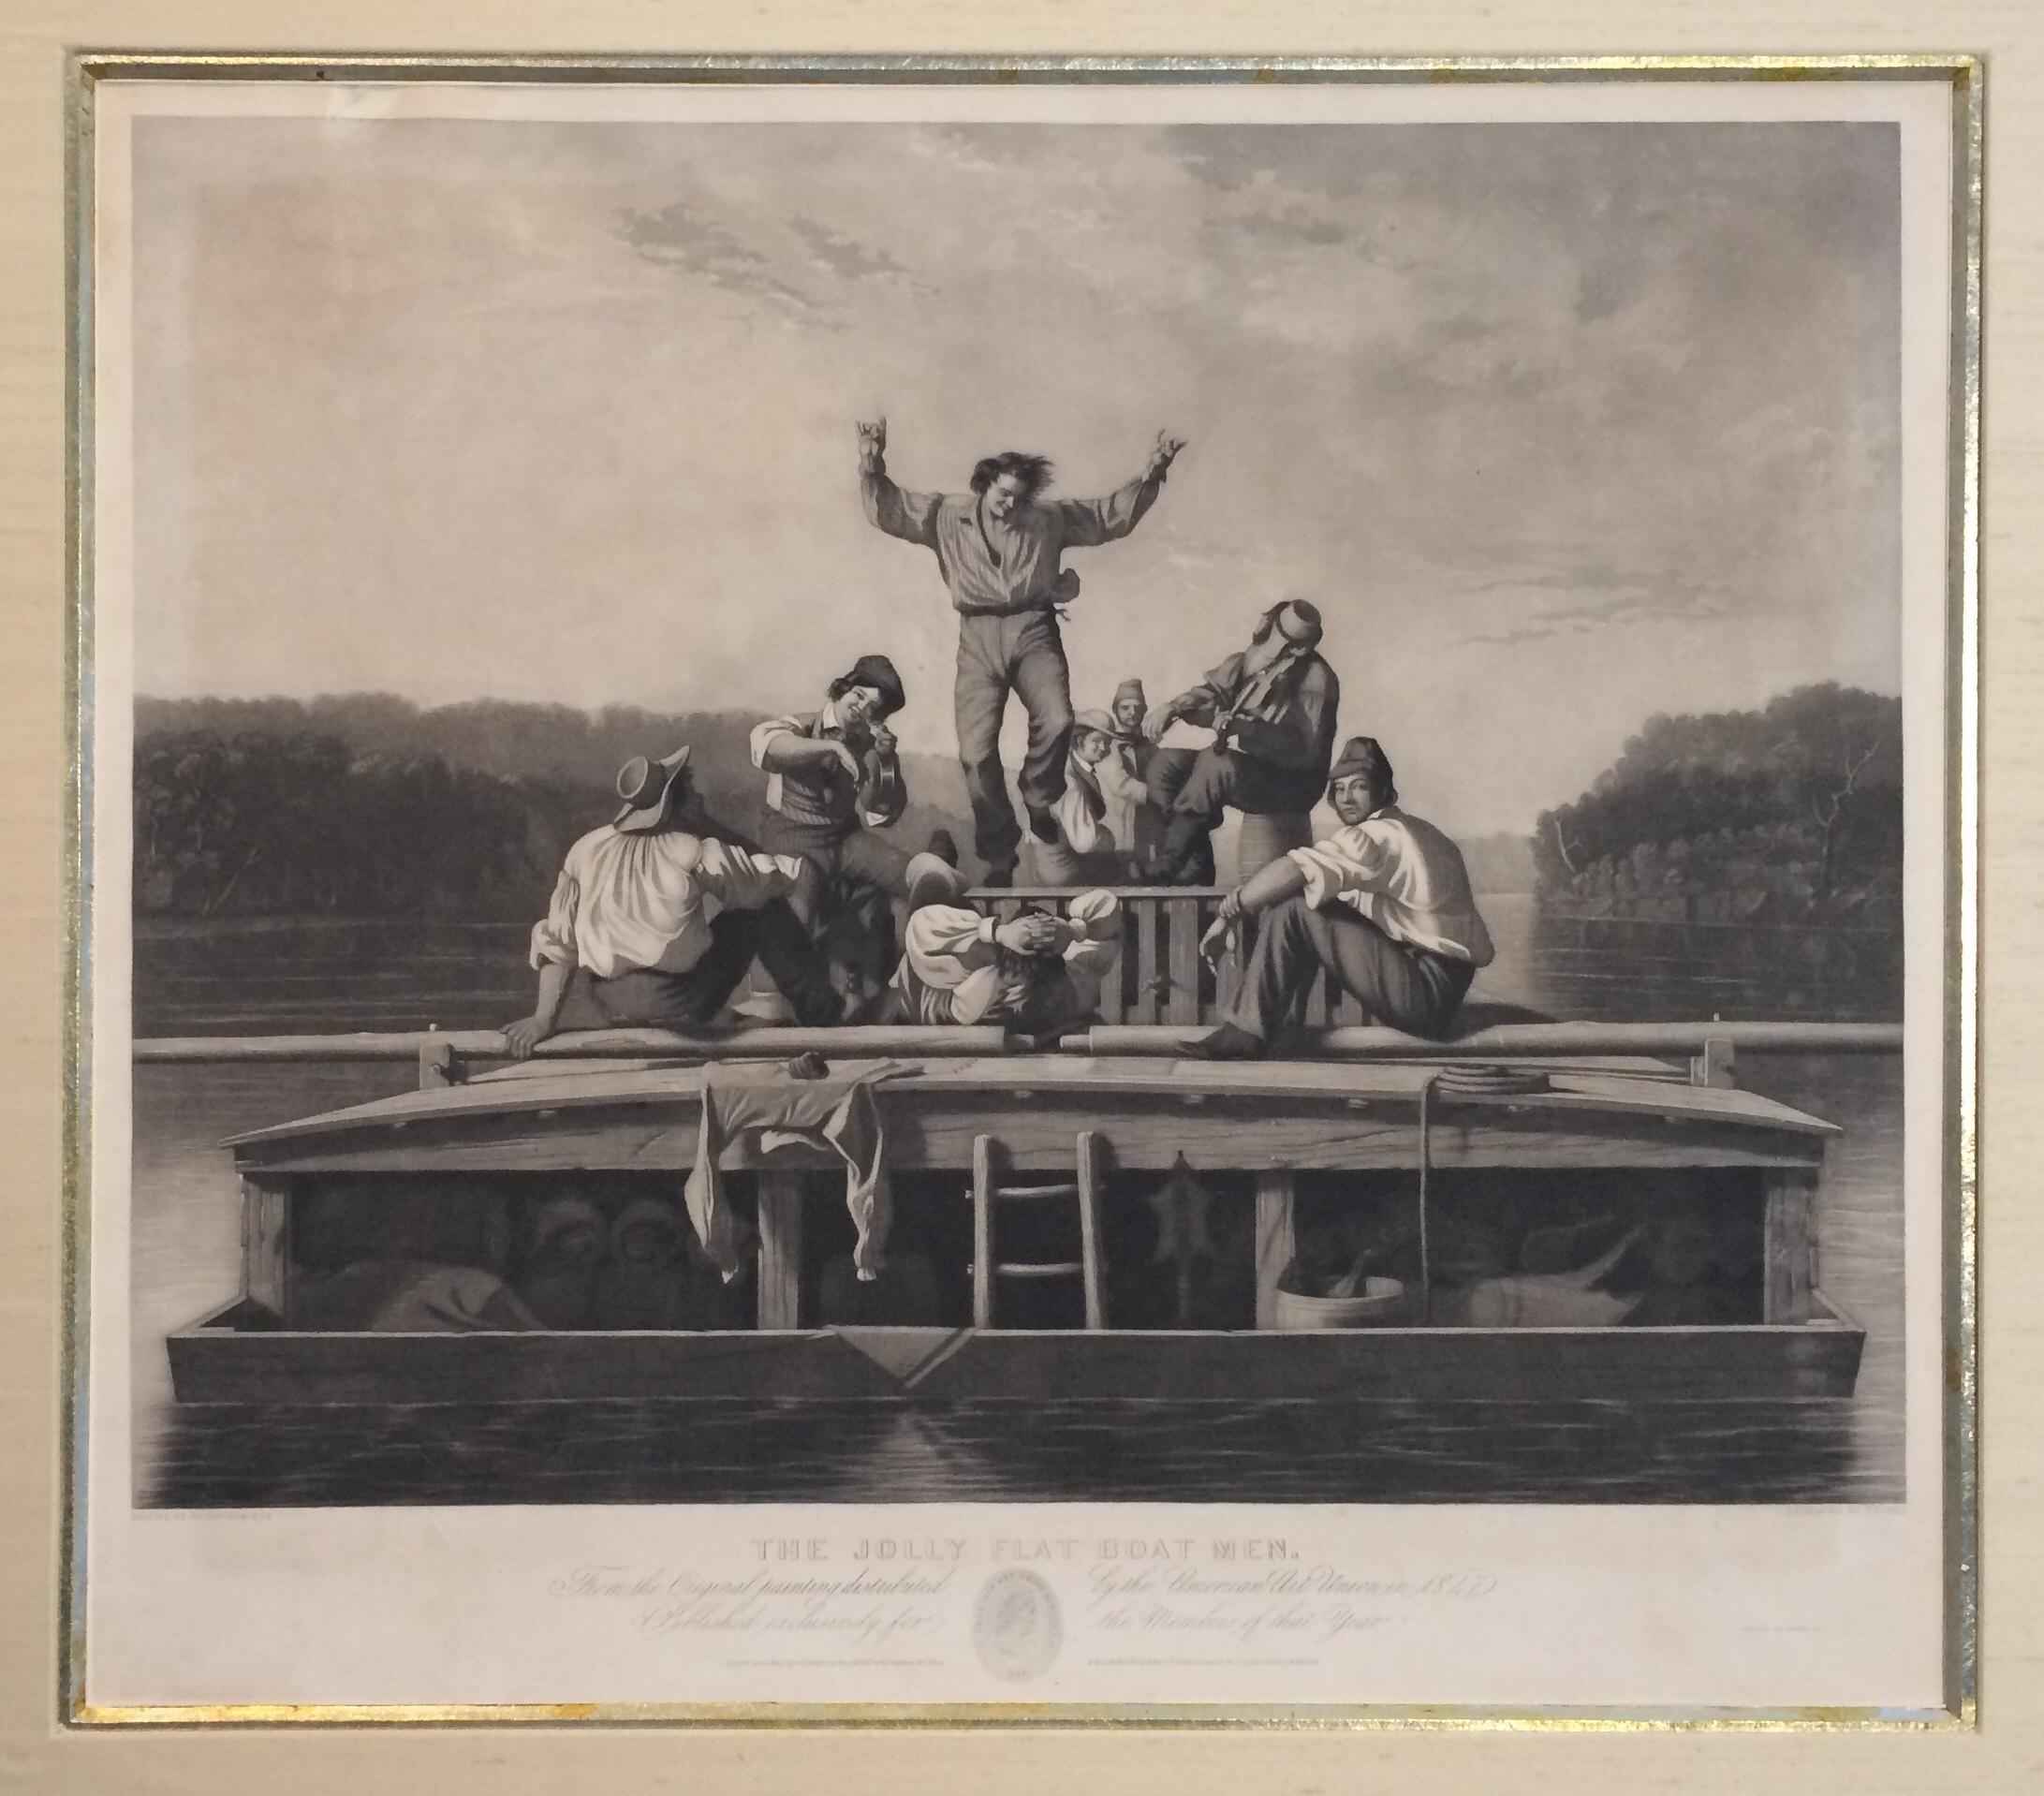 George Caleb Bingham Figurative Print - "The Jolly Flatboatmen" Missouri River Frontier Old West, Louisiana Purchase